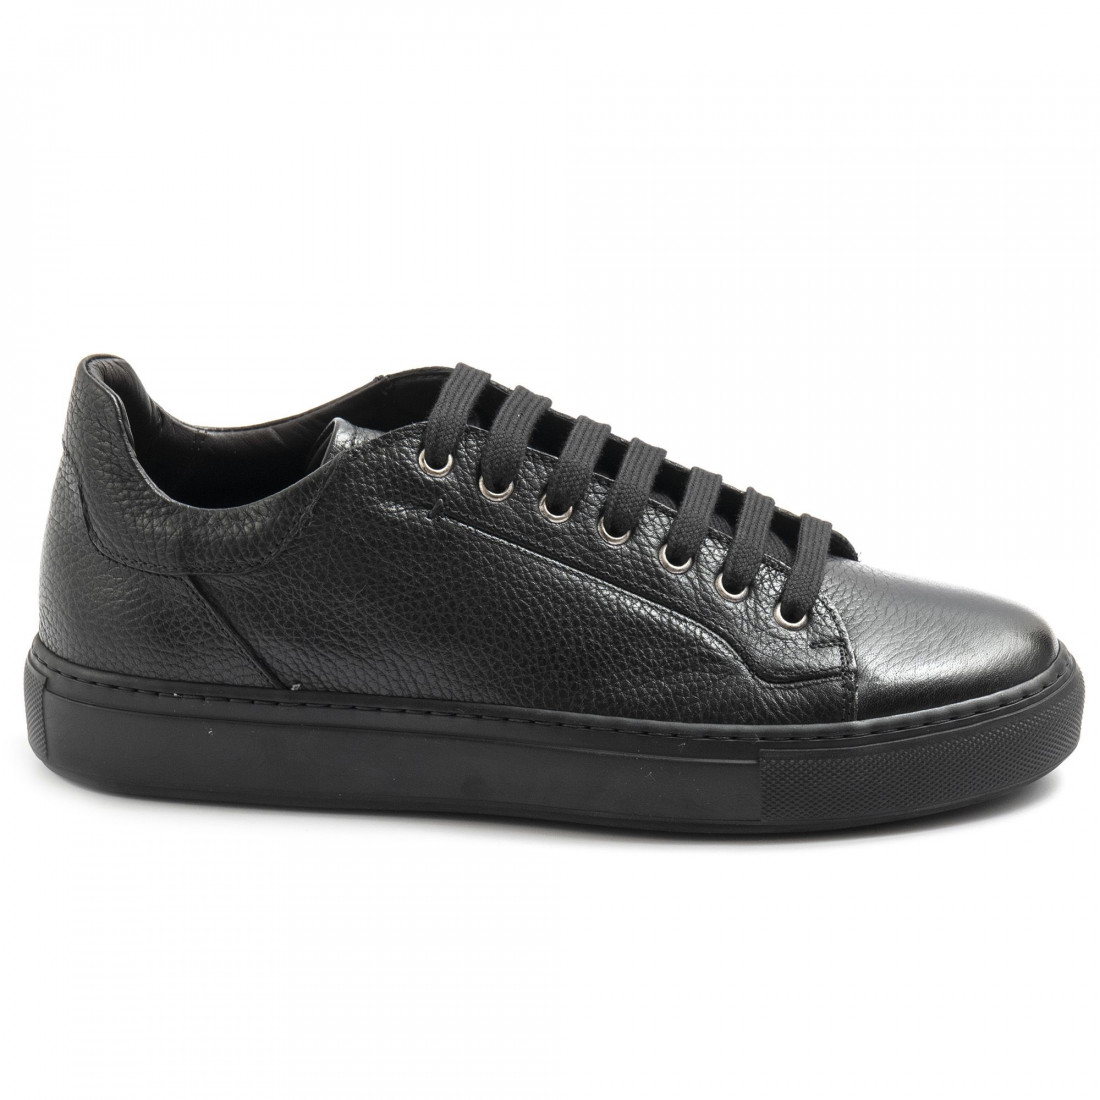 Black premium leather Brecos casual men's shoes